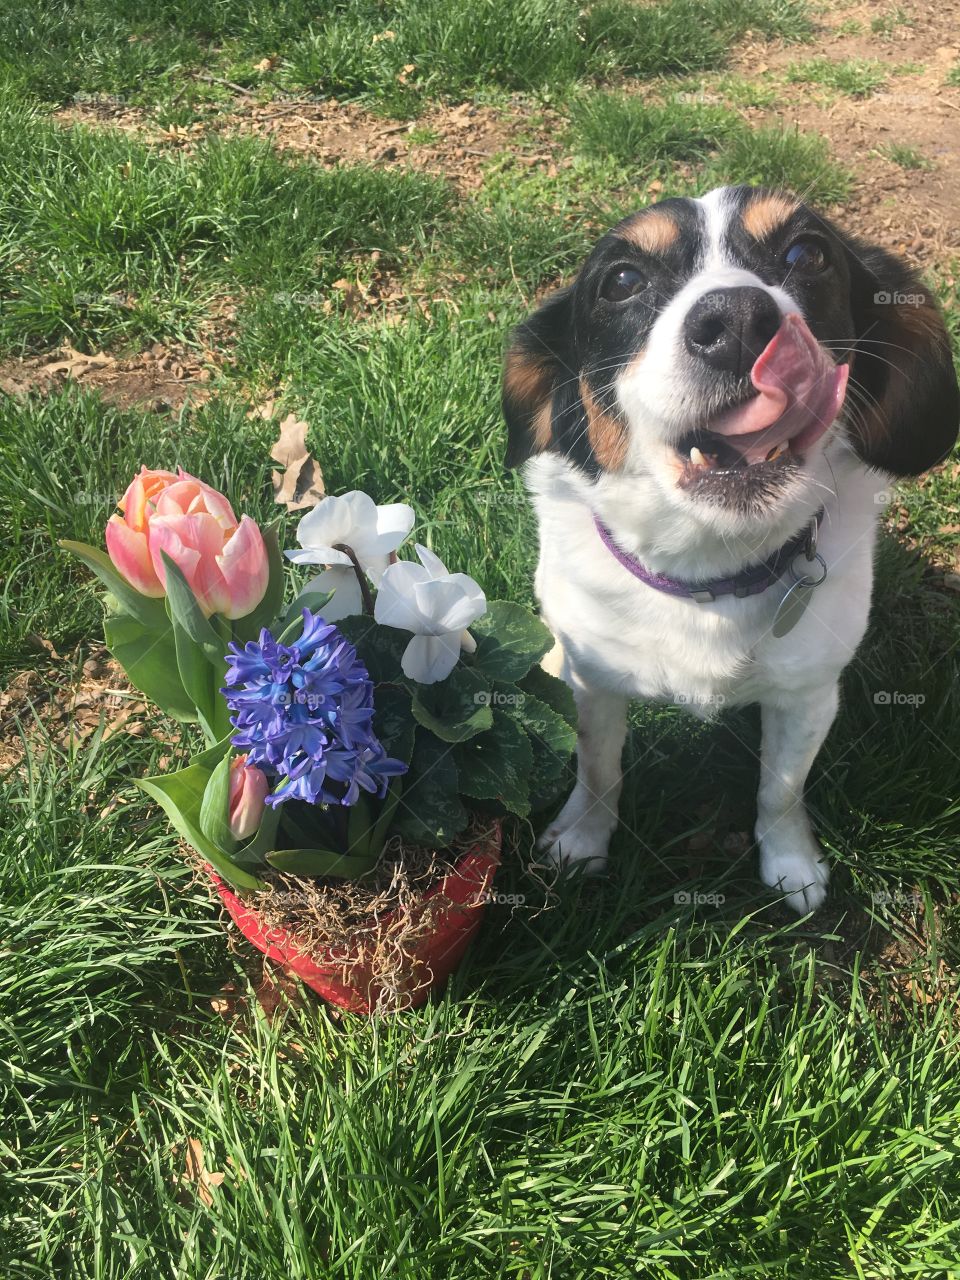 Dog lickinb lips next to spring flowers